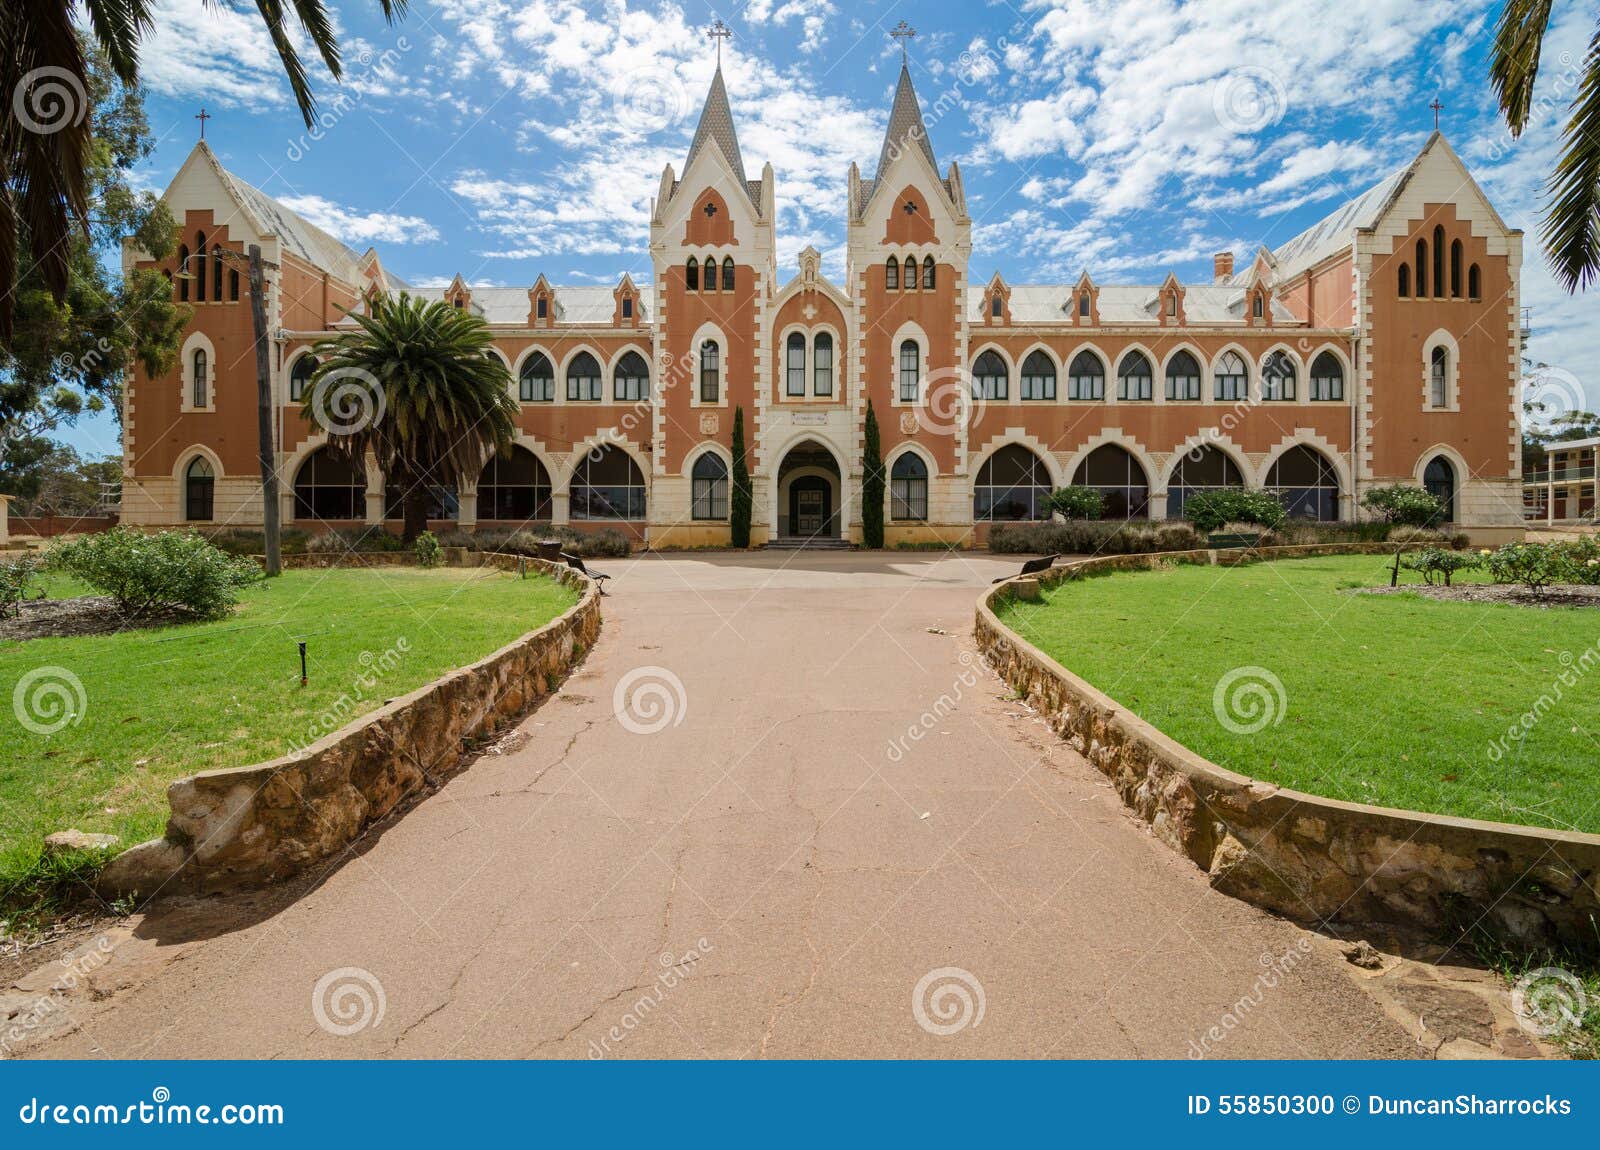 st gertrudeÃ¢â¬â¢s college new norcia, western australia